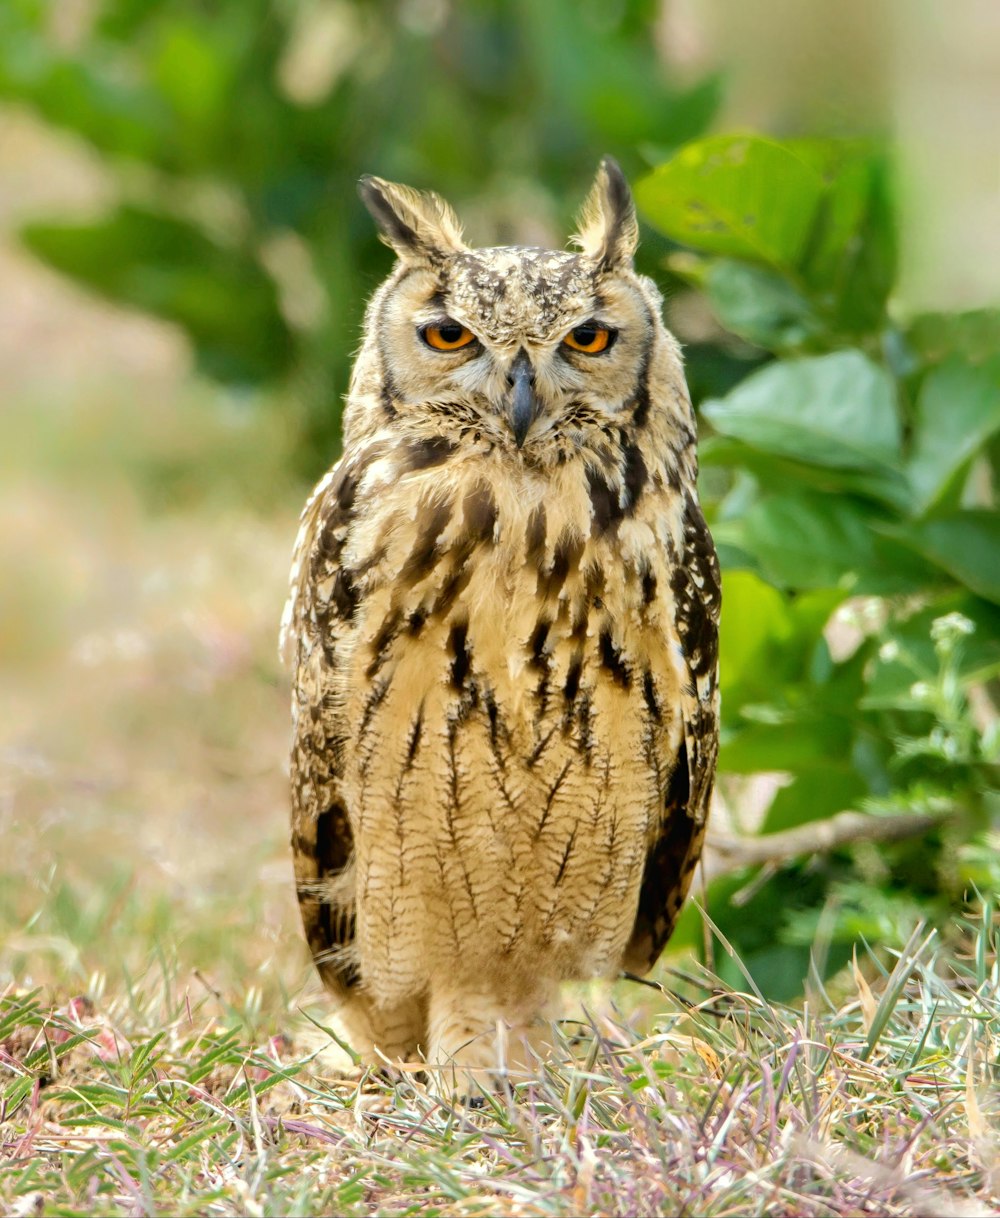 an owl is standing in the grass near a bush